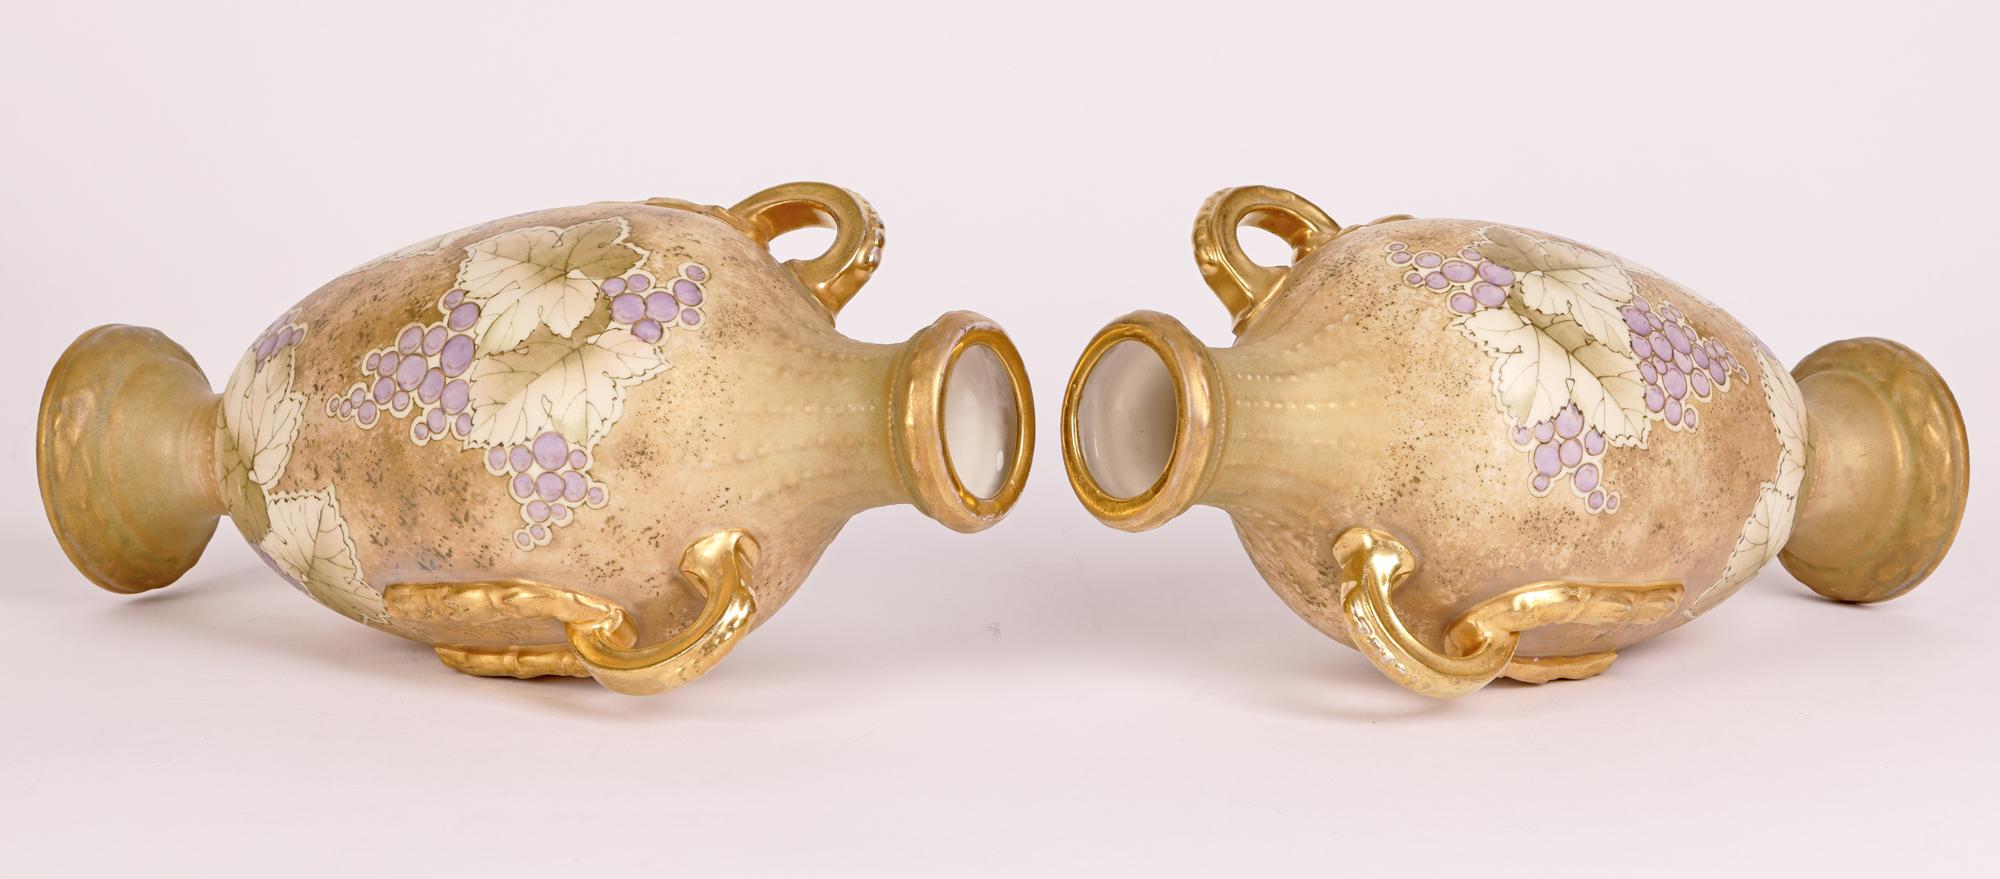 Austrian Turn Teplitz RSK Amphora Pair Art Nouveau Hand-Painted Twin Handled Vases For Sale